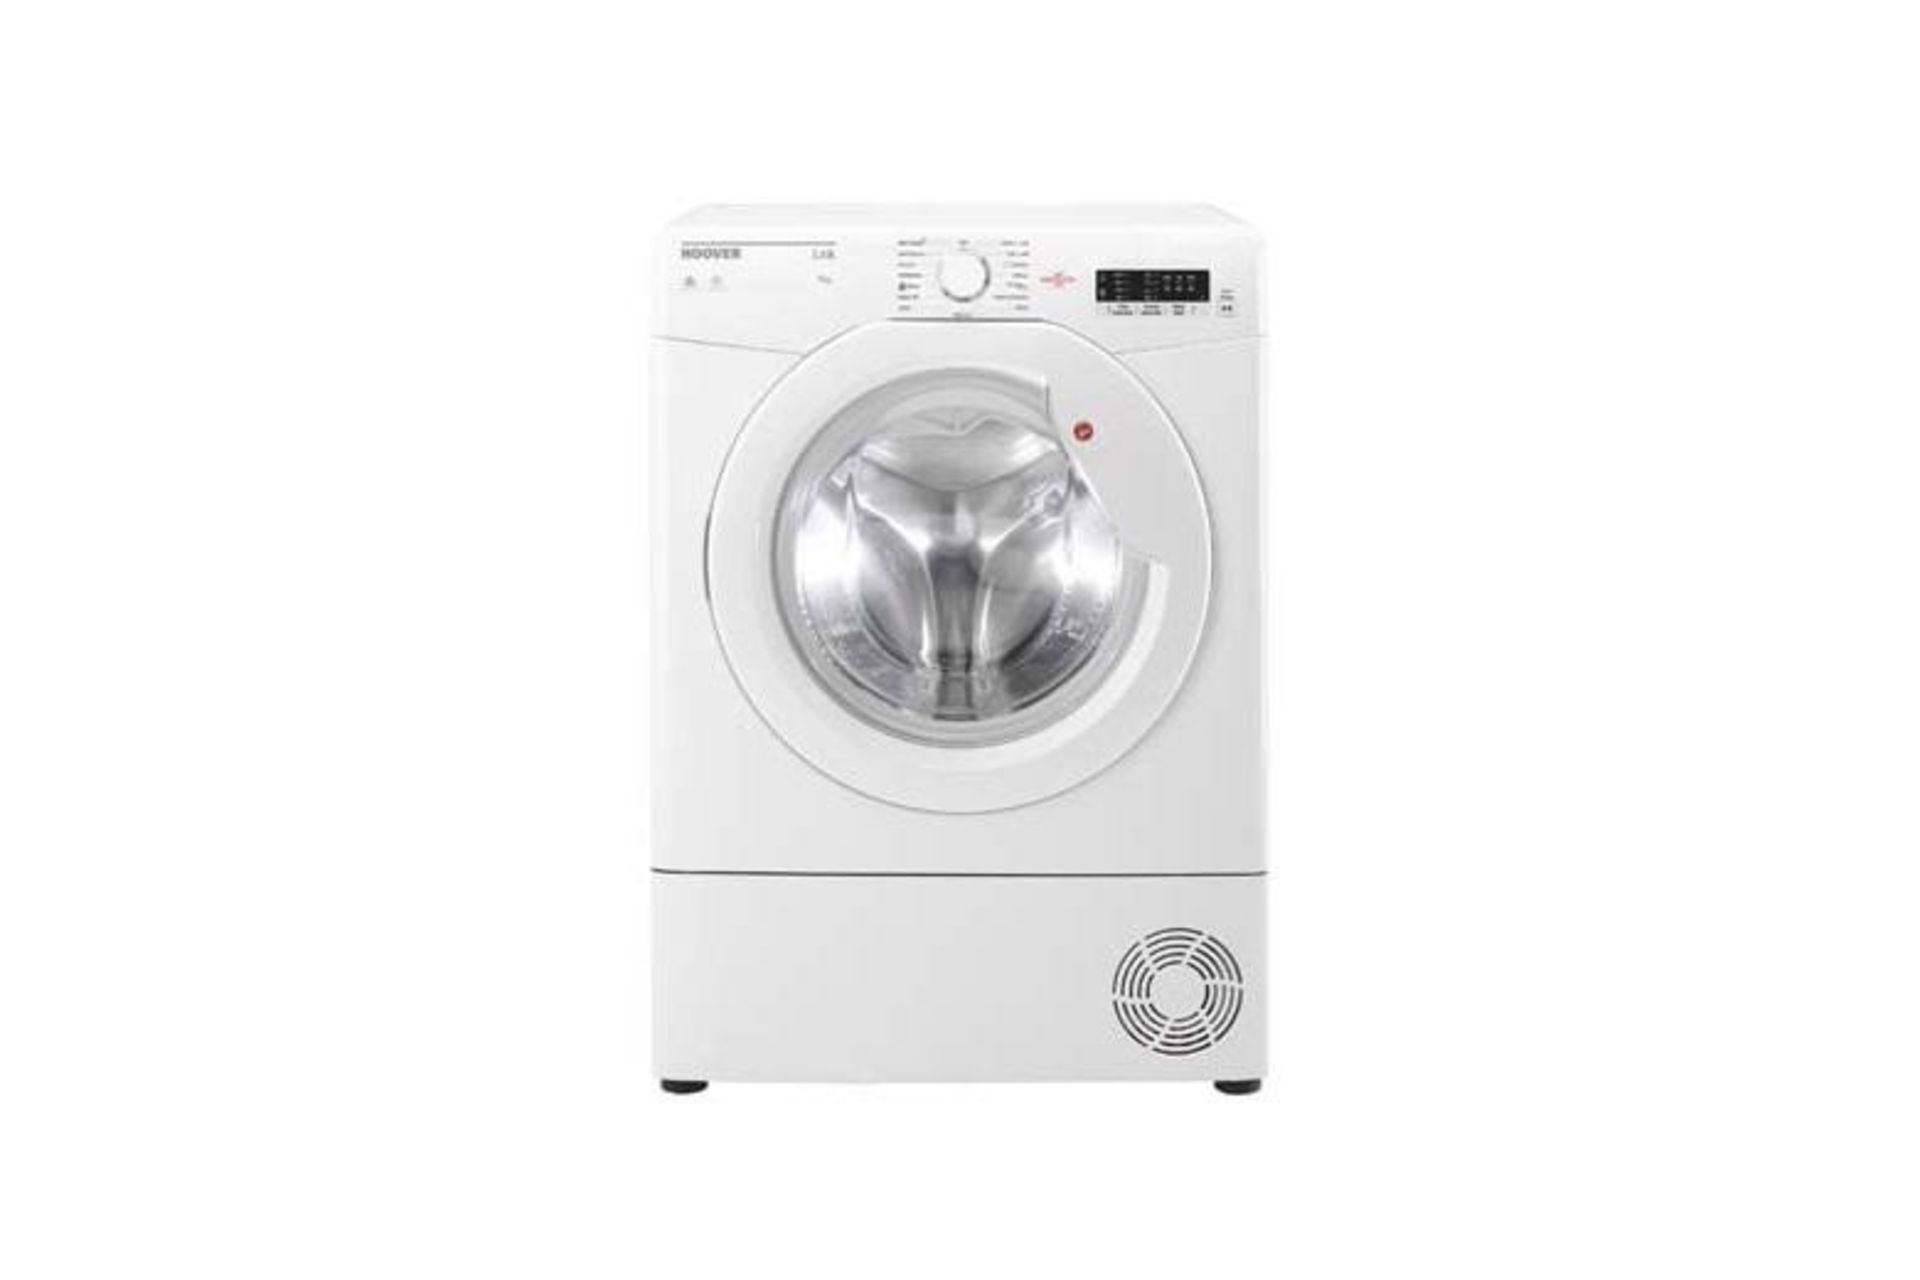 Mixed Lot of Six Refurbished Appliances including Beko 9KG Washing Machine in Black, manufacturer’ - Image 4 of 4